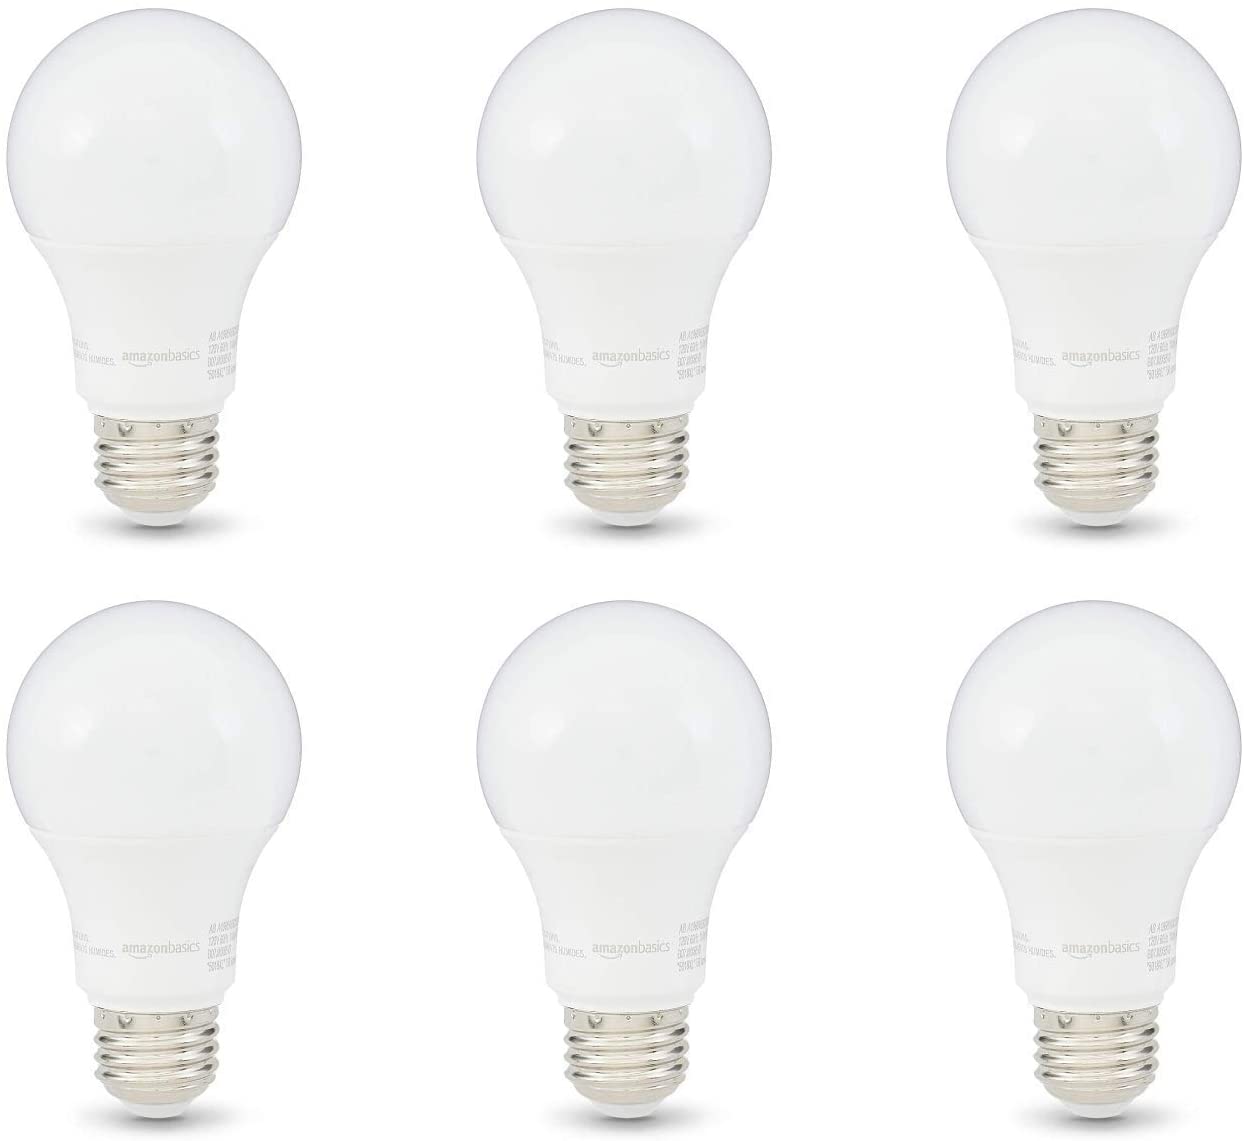 AmazonBasics 60W Equivalent Daylight Dimmable LED Lightbulbs, 6-Pack